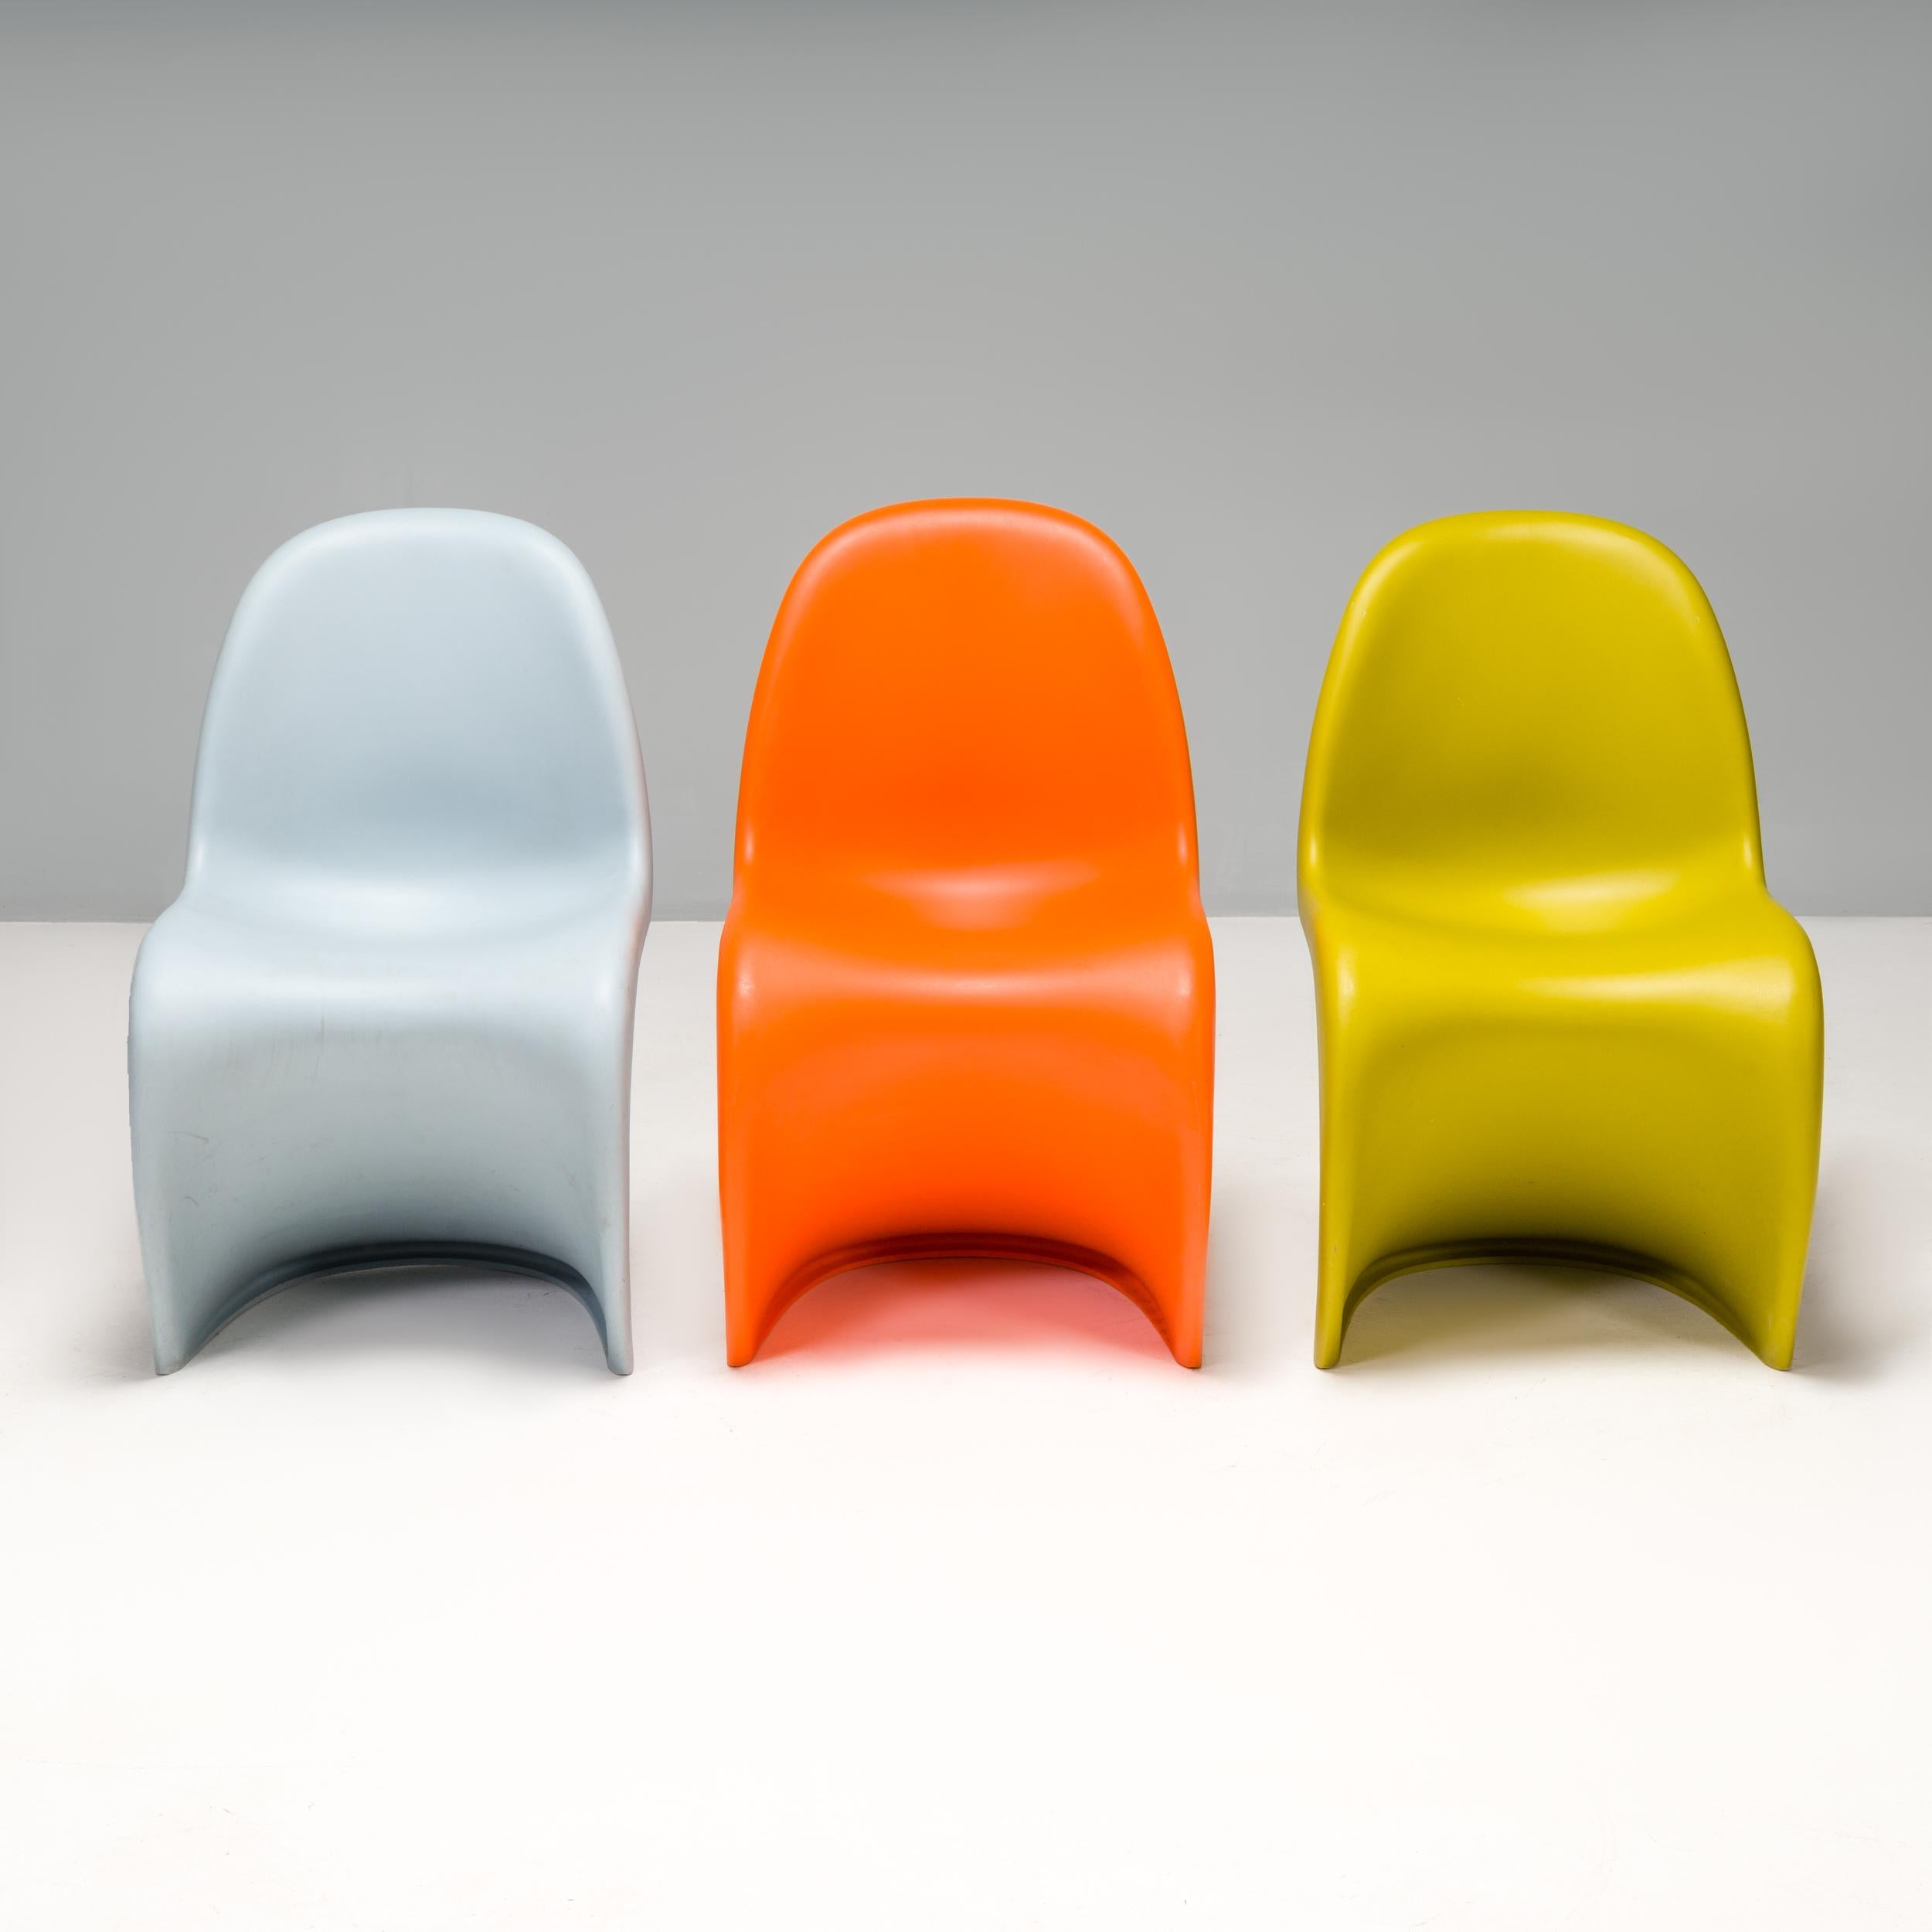 Contemporary Mid-century Modern Orange Panton Chair by Verner Panton for Vitra